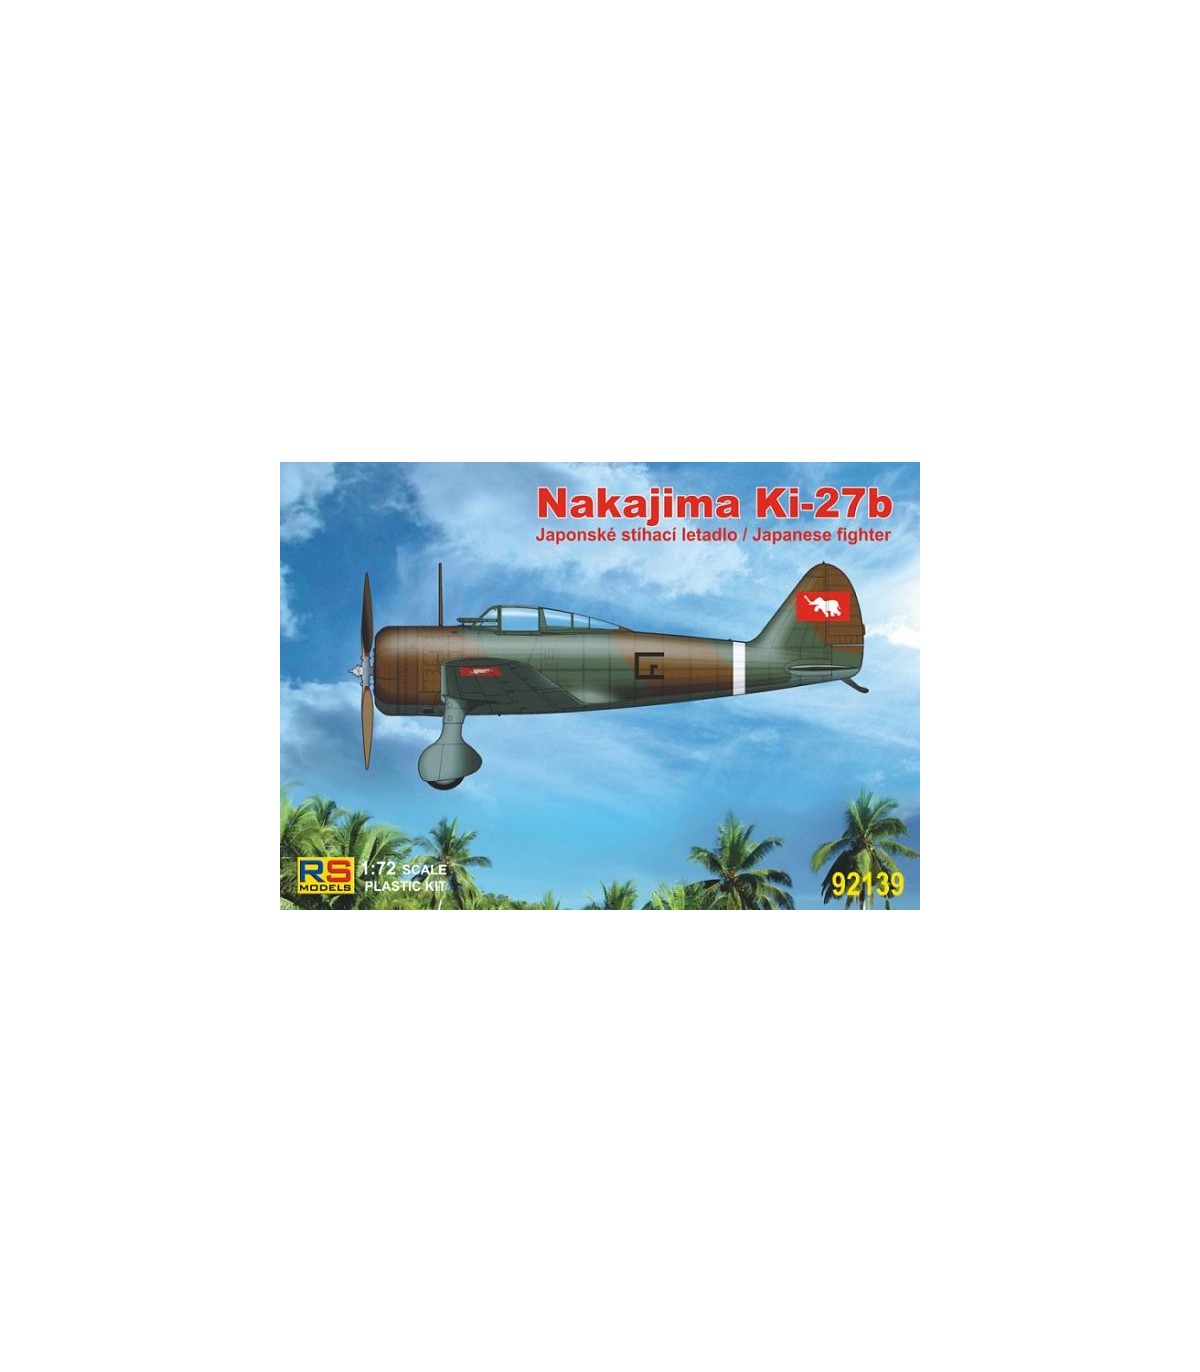 RS Models 1/72 Nakajima Ki-27b # 92137 